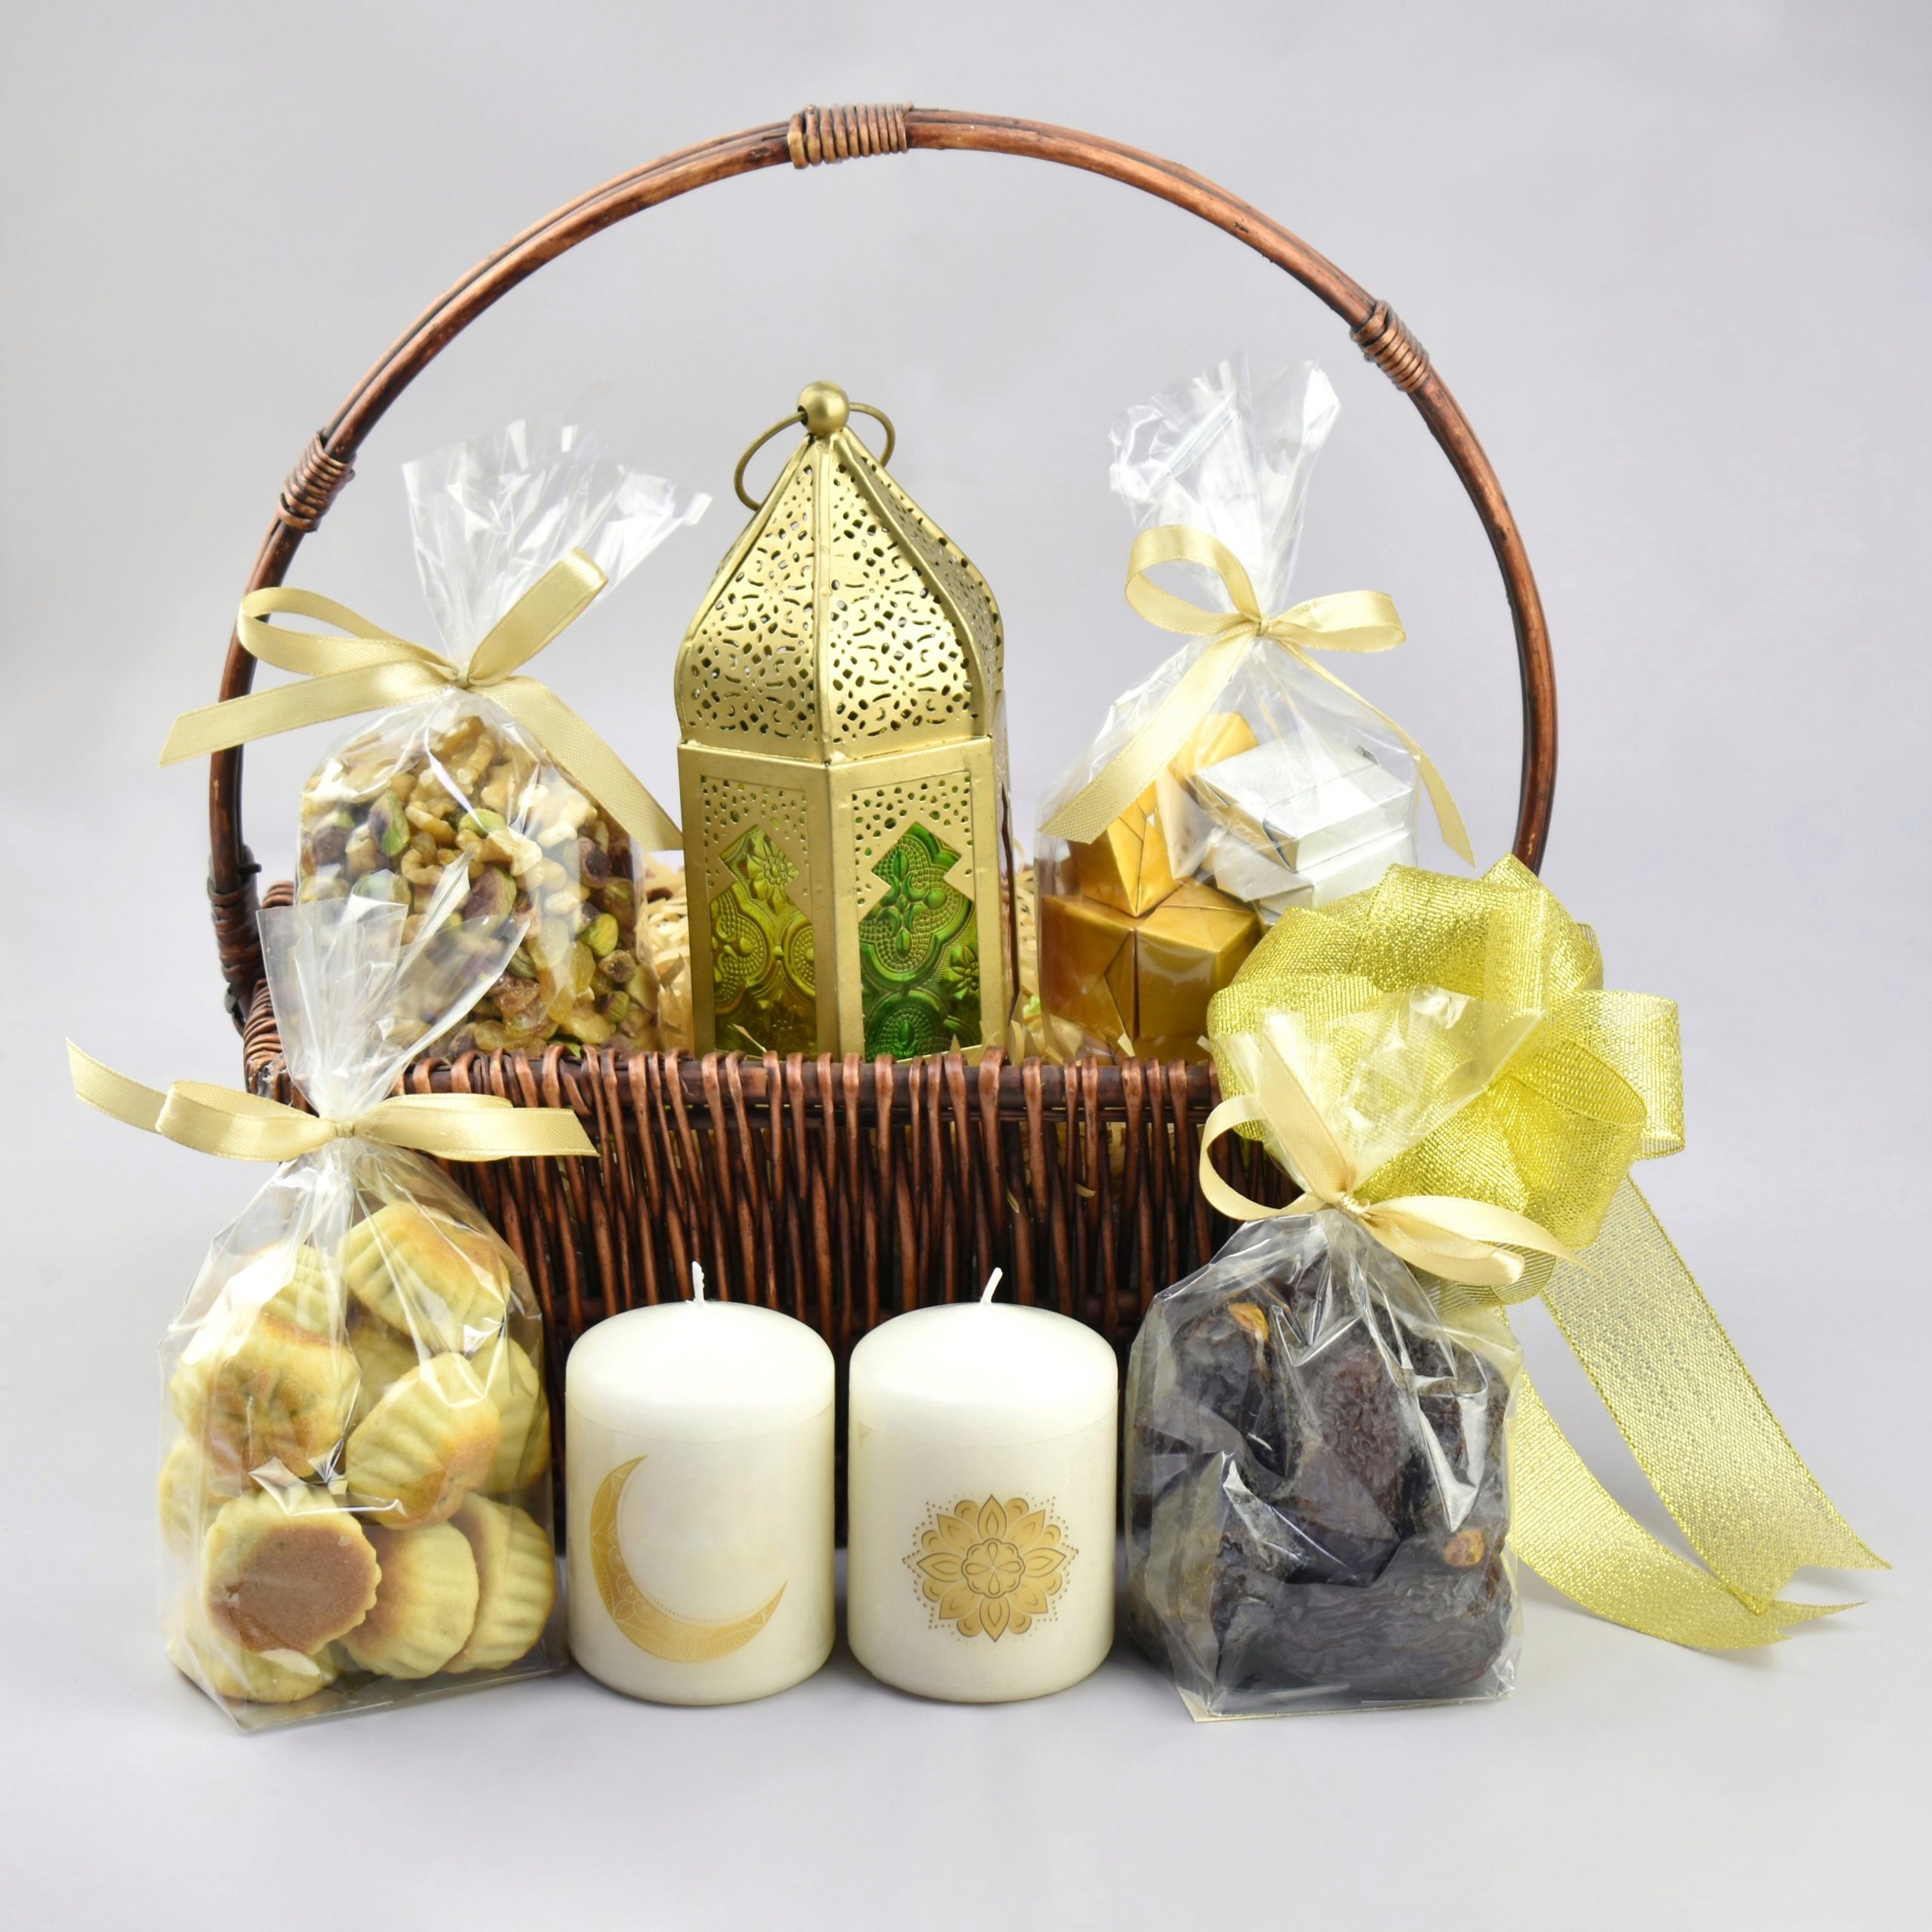 Noorah Gifts | Beautiful Islamic Gifts, Eid Gifts, Islamic Wedding